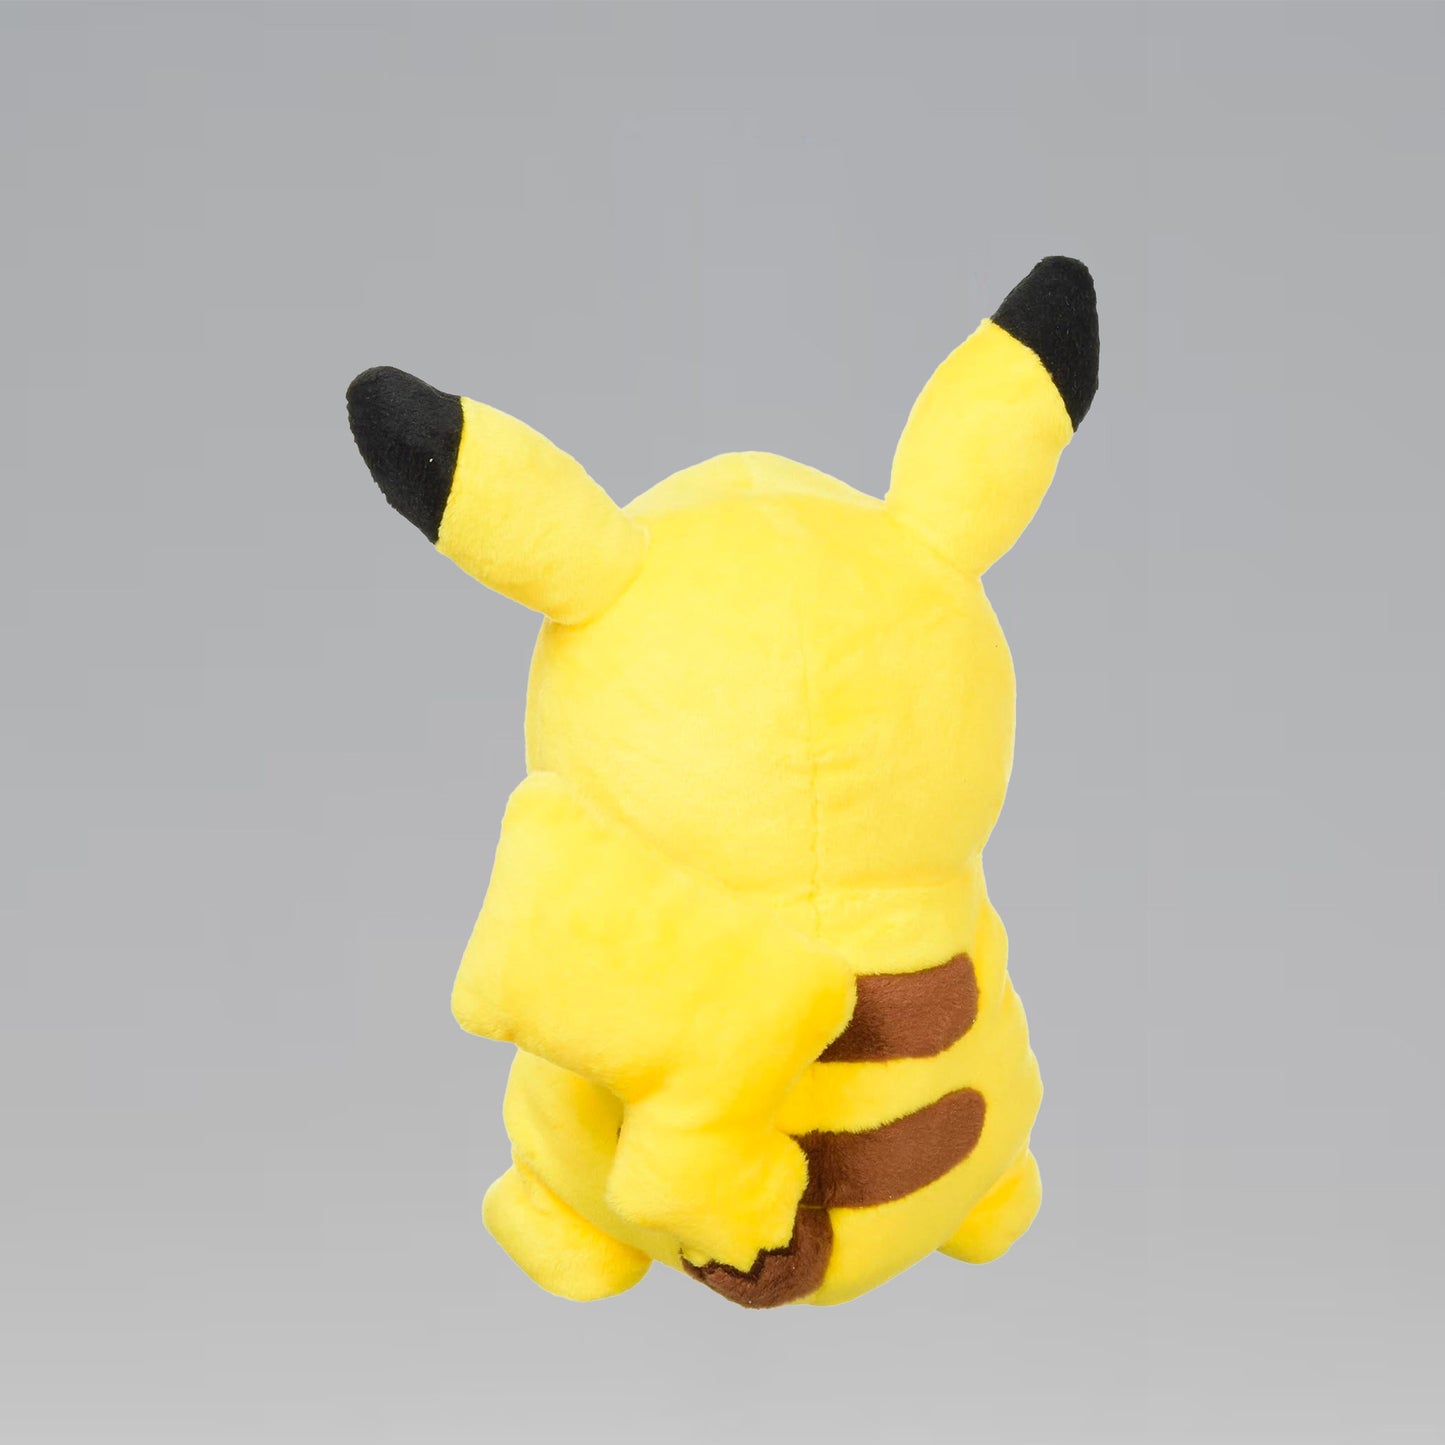 Pikachu Pokemon Plush All Star Collection